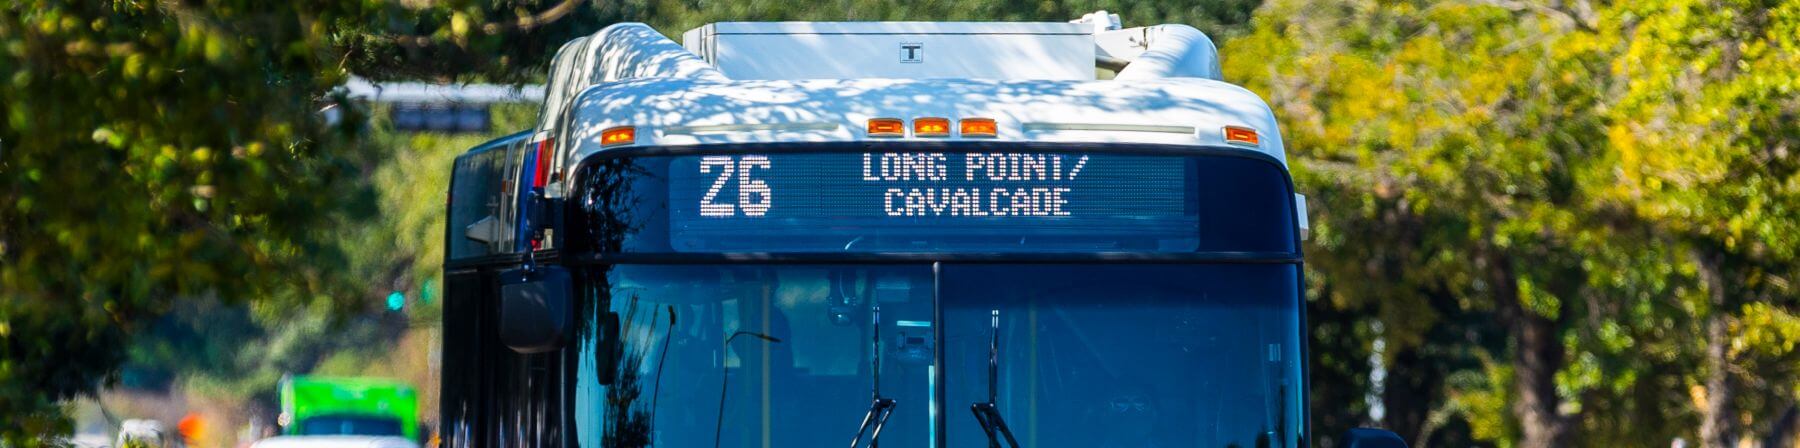 26 Long Point / Cavalcade bus